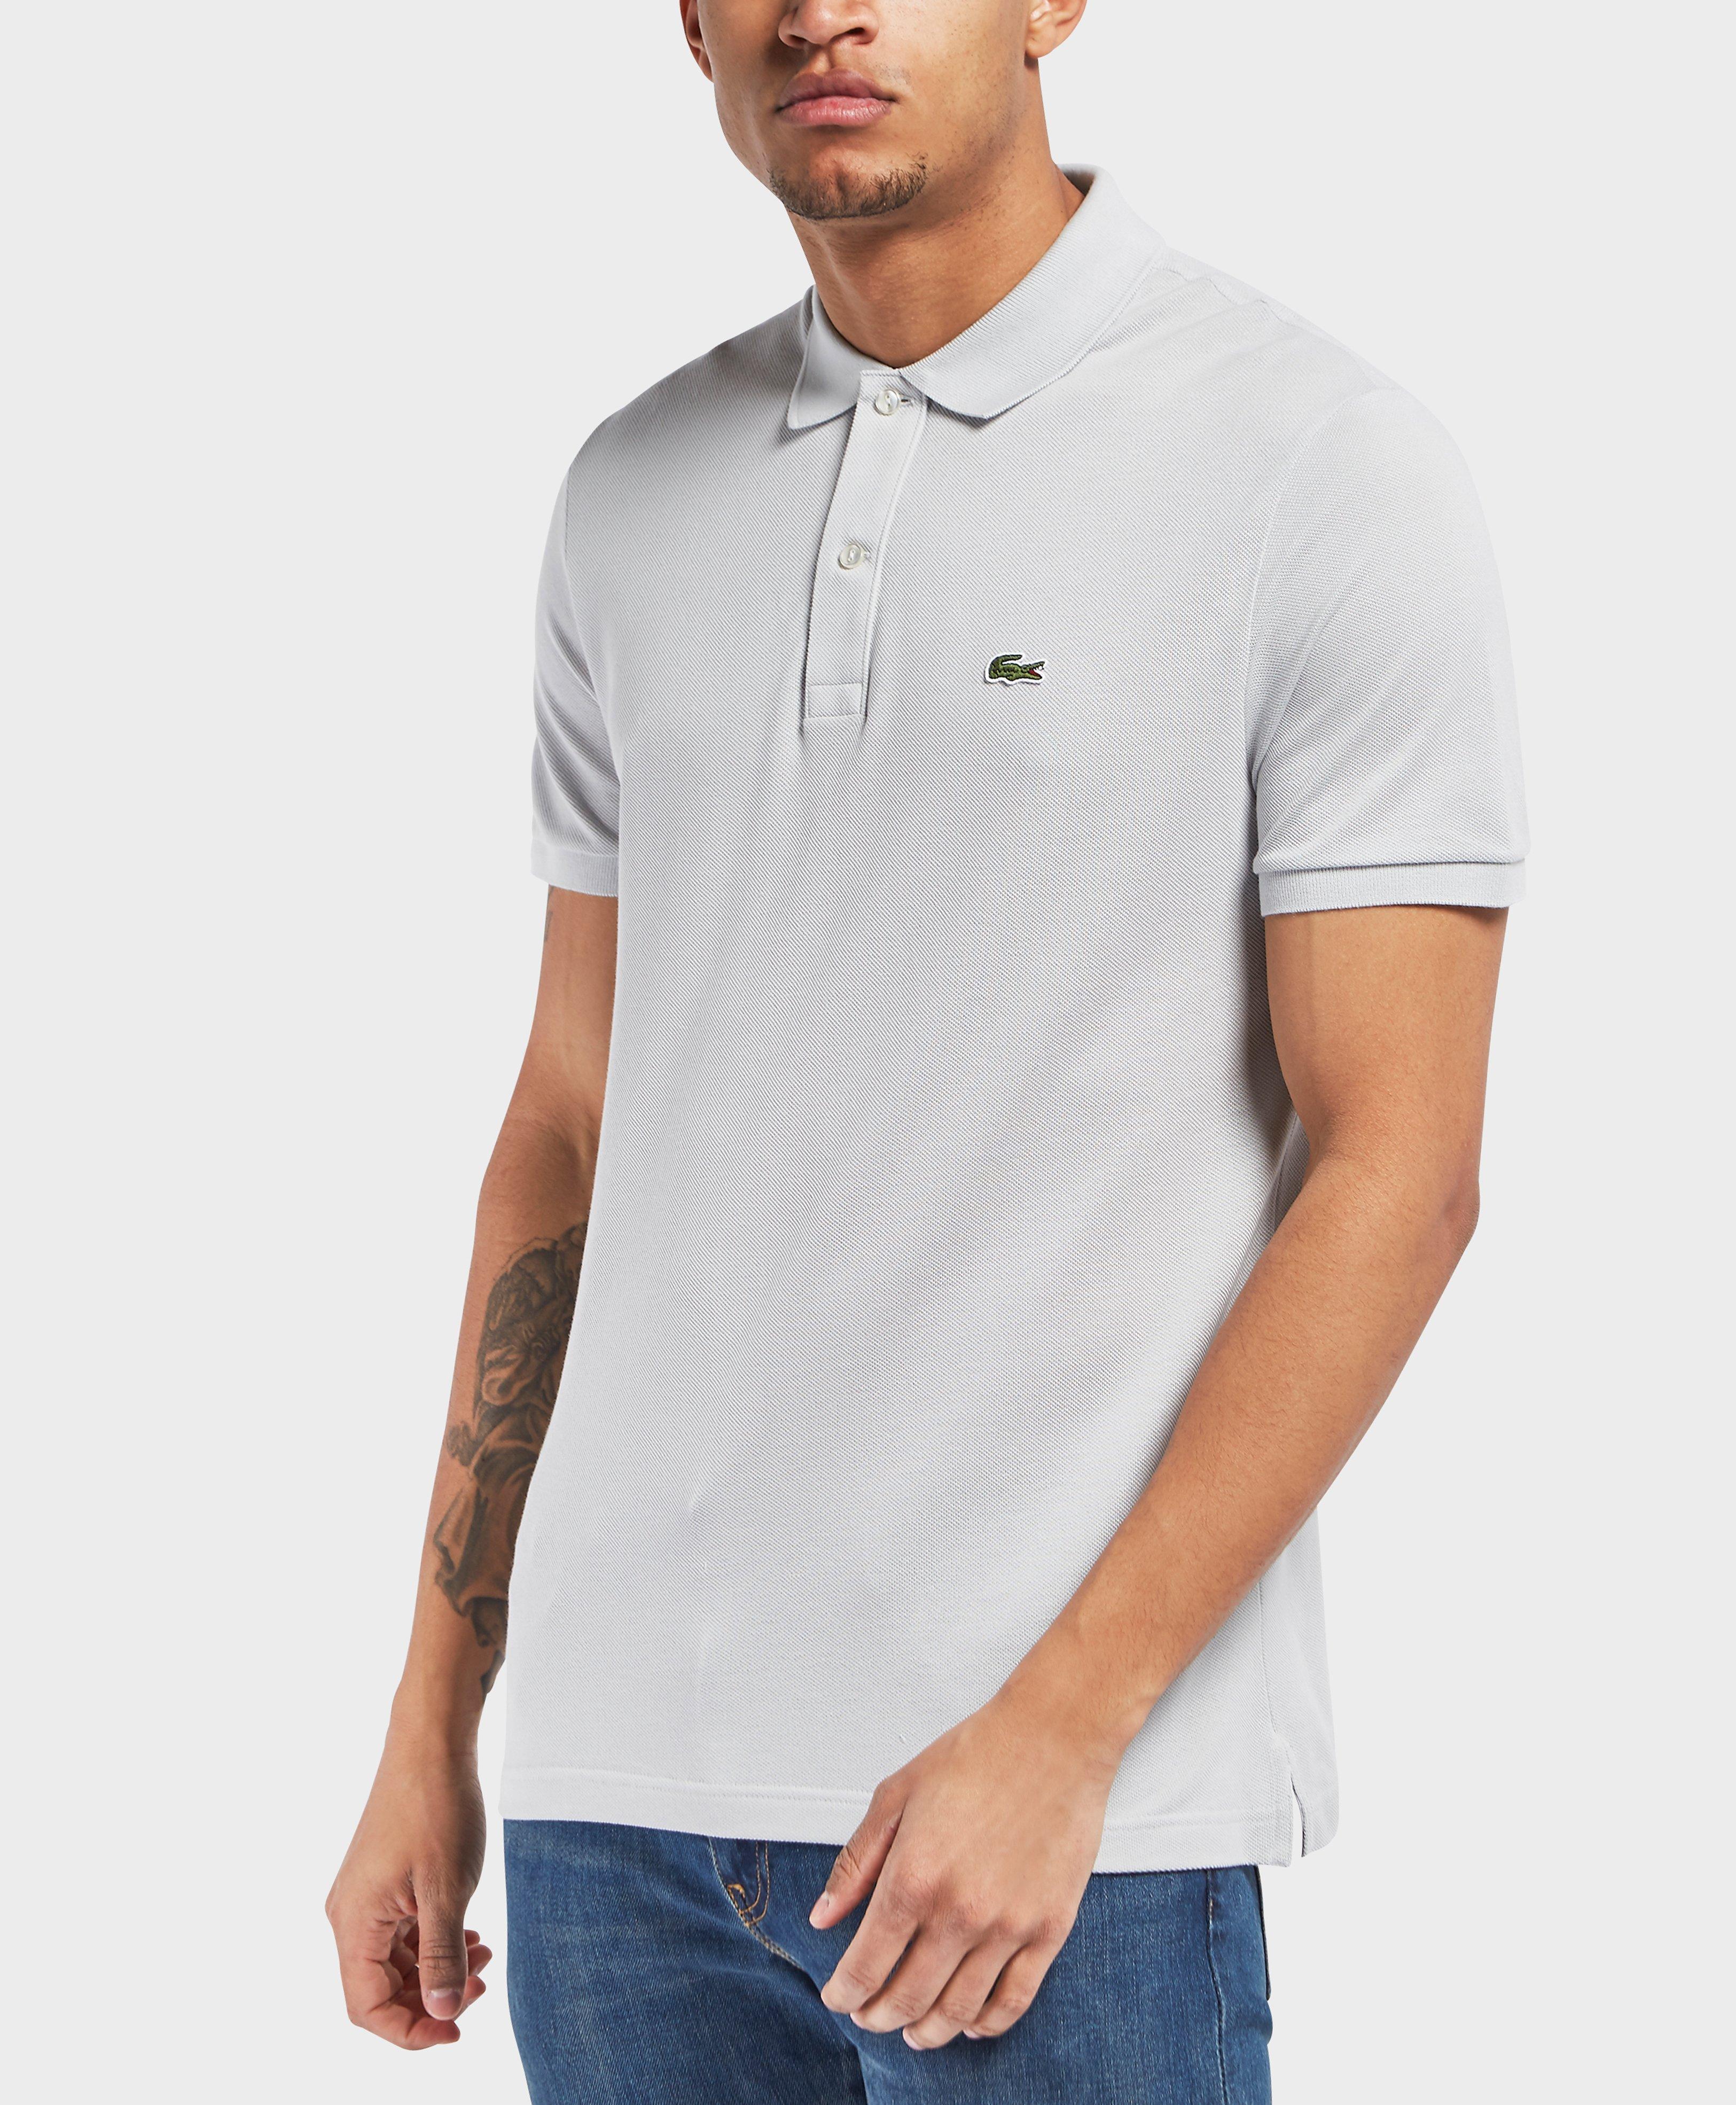 White Details about   Lacoste Men's Logo Polo Shirt 